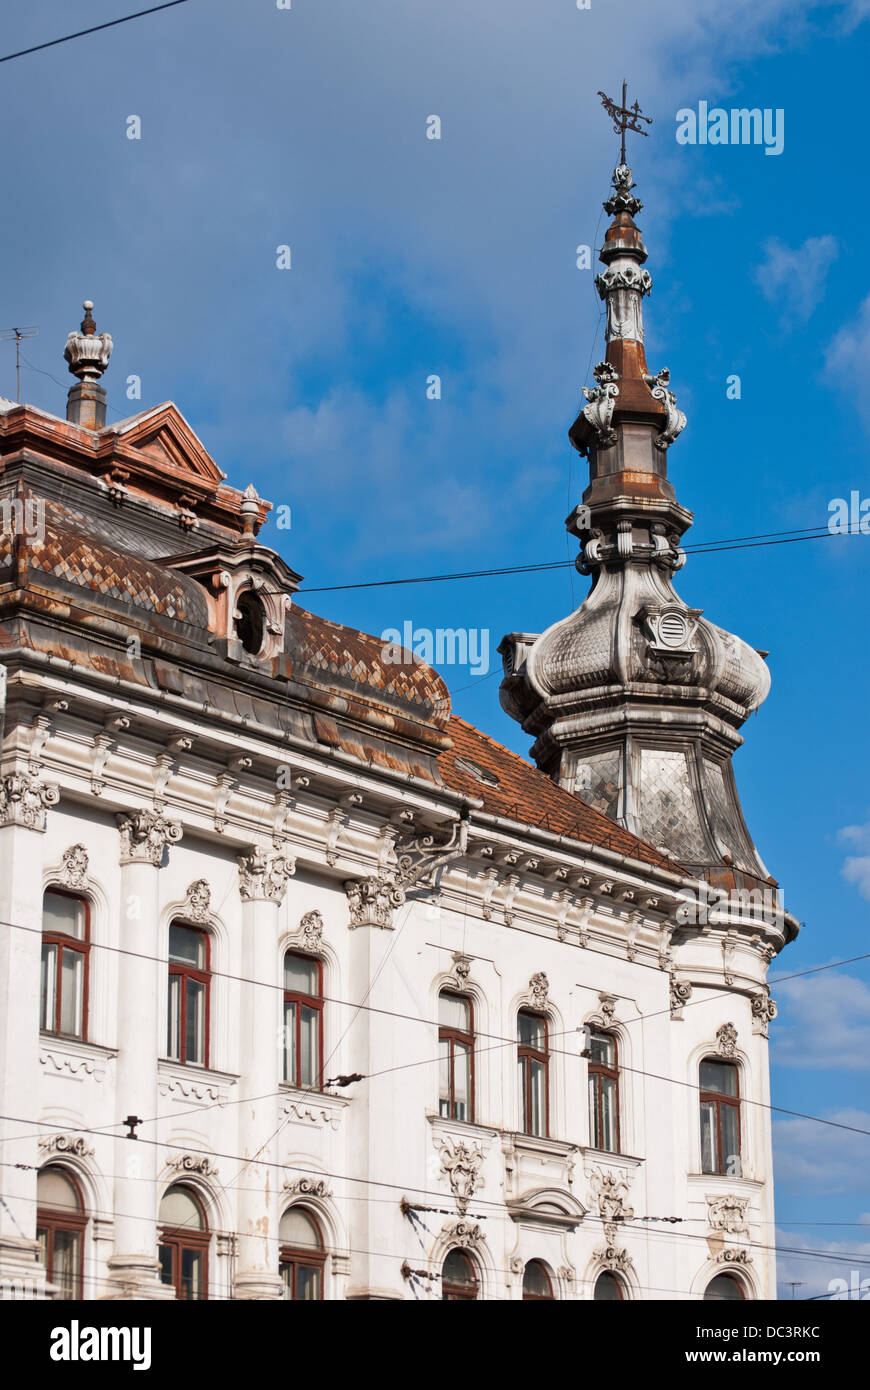 Street landmark in Cluj-Napoca, Romania, Dettagli architettonici Foto Stock